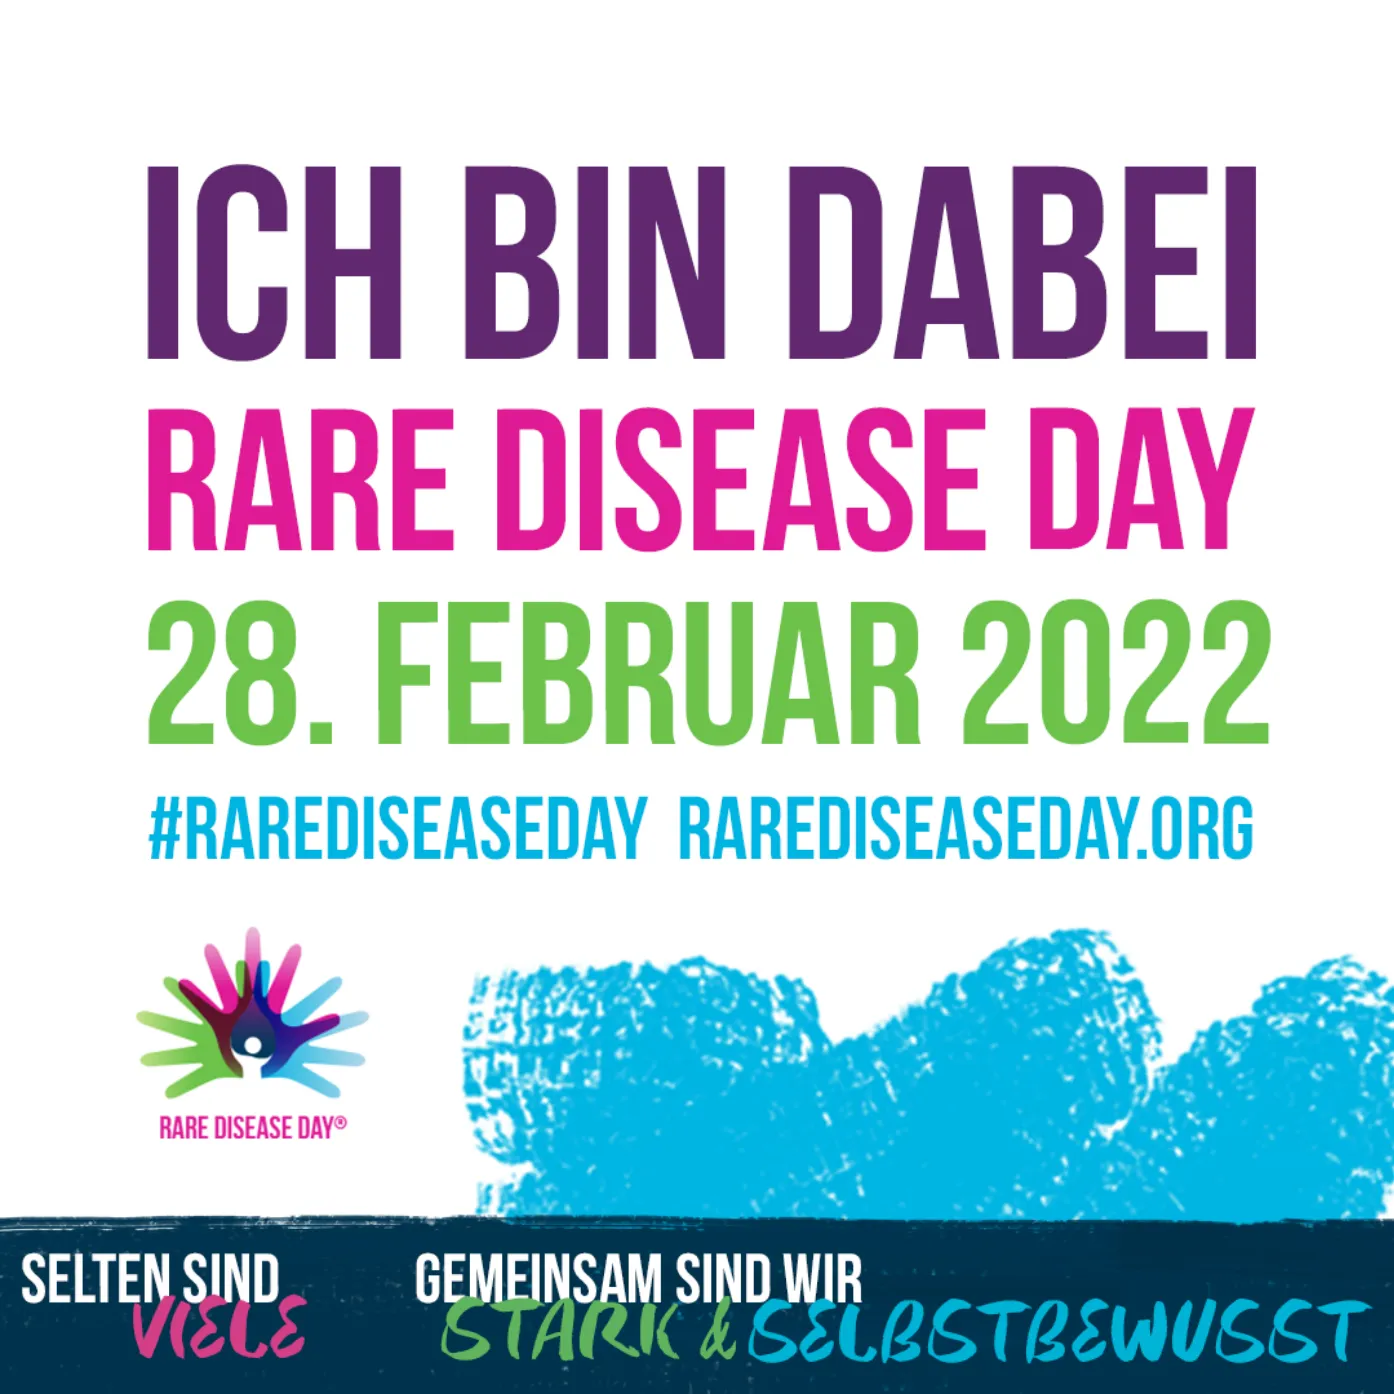 Ich bin dabei, Rare Disease Day, 28. Februar 2022, Plakat